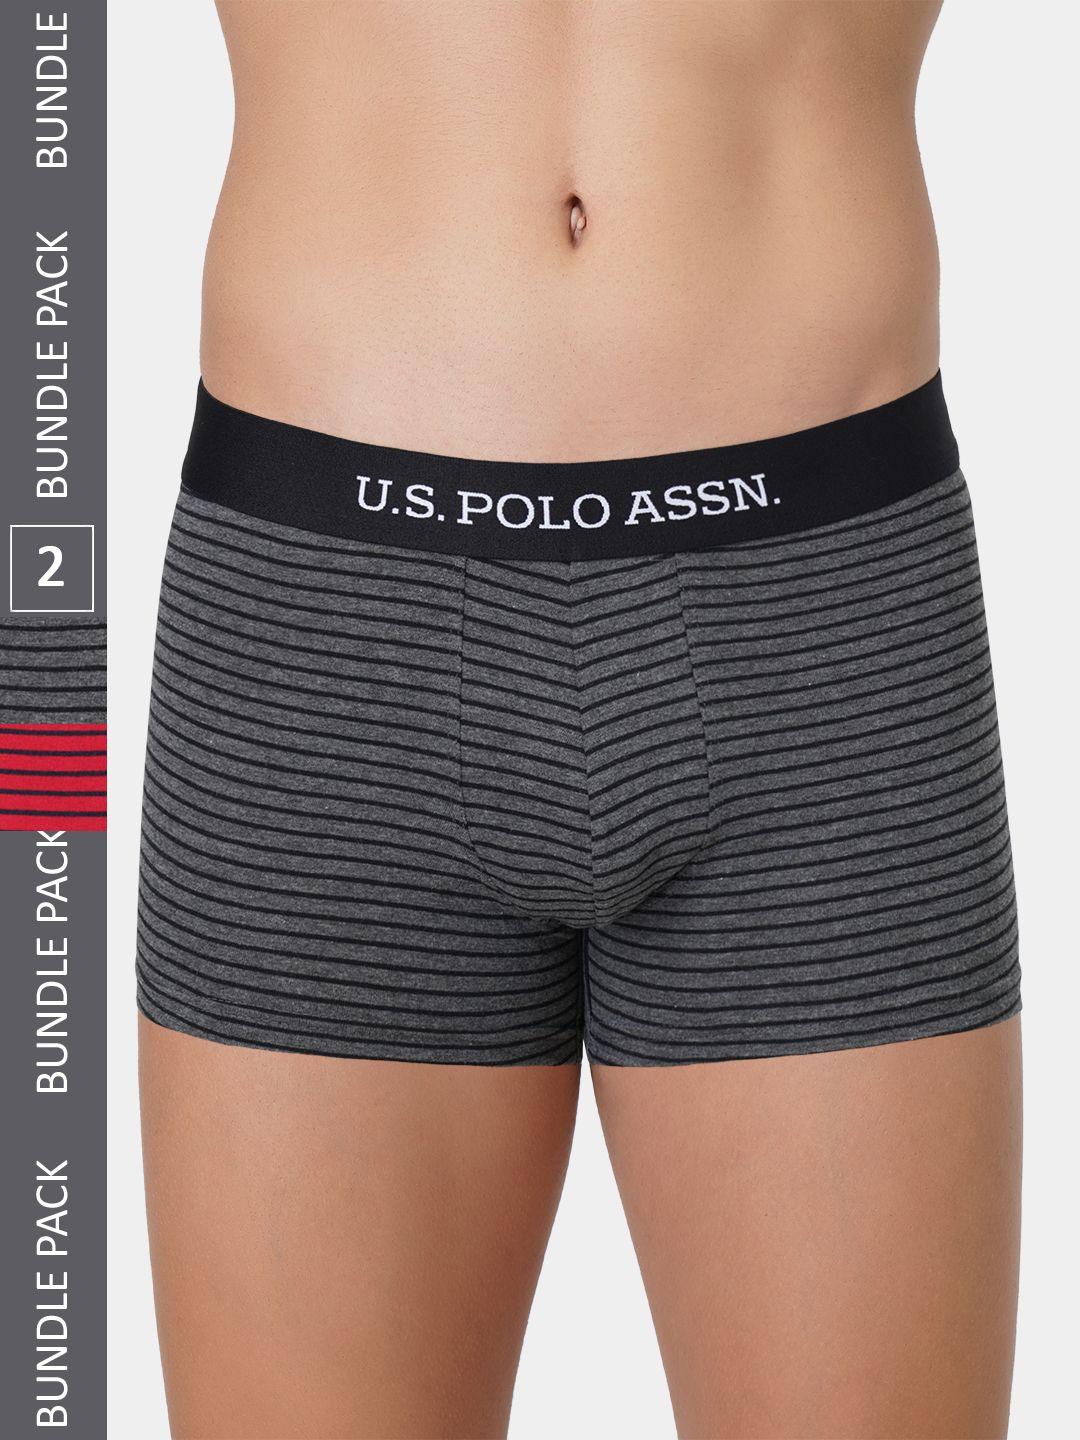 U.S. Polo Assn. Men Pack Of 2 Striped Cotton Trunks ET005-GR1-P2